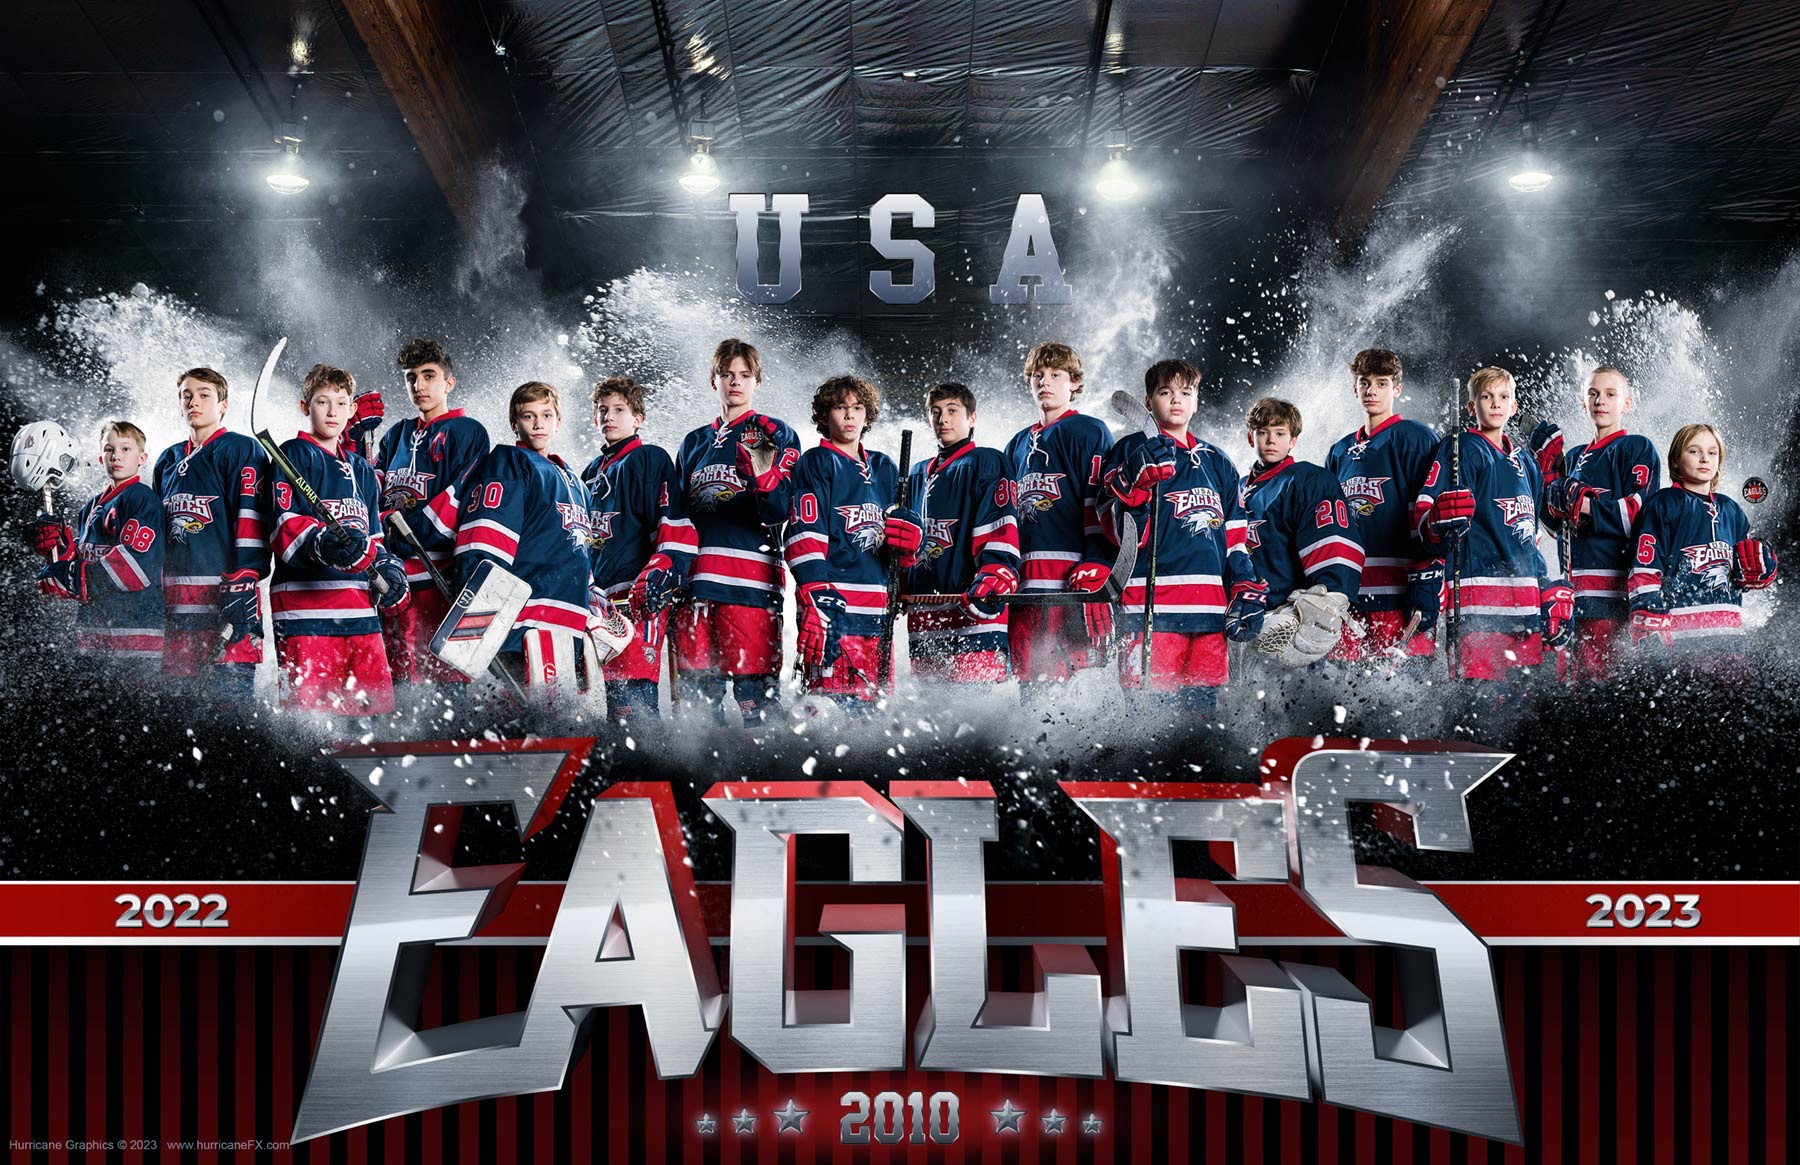 2010 USA Eagles Team Photo Feb 2023